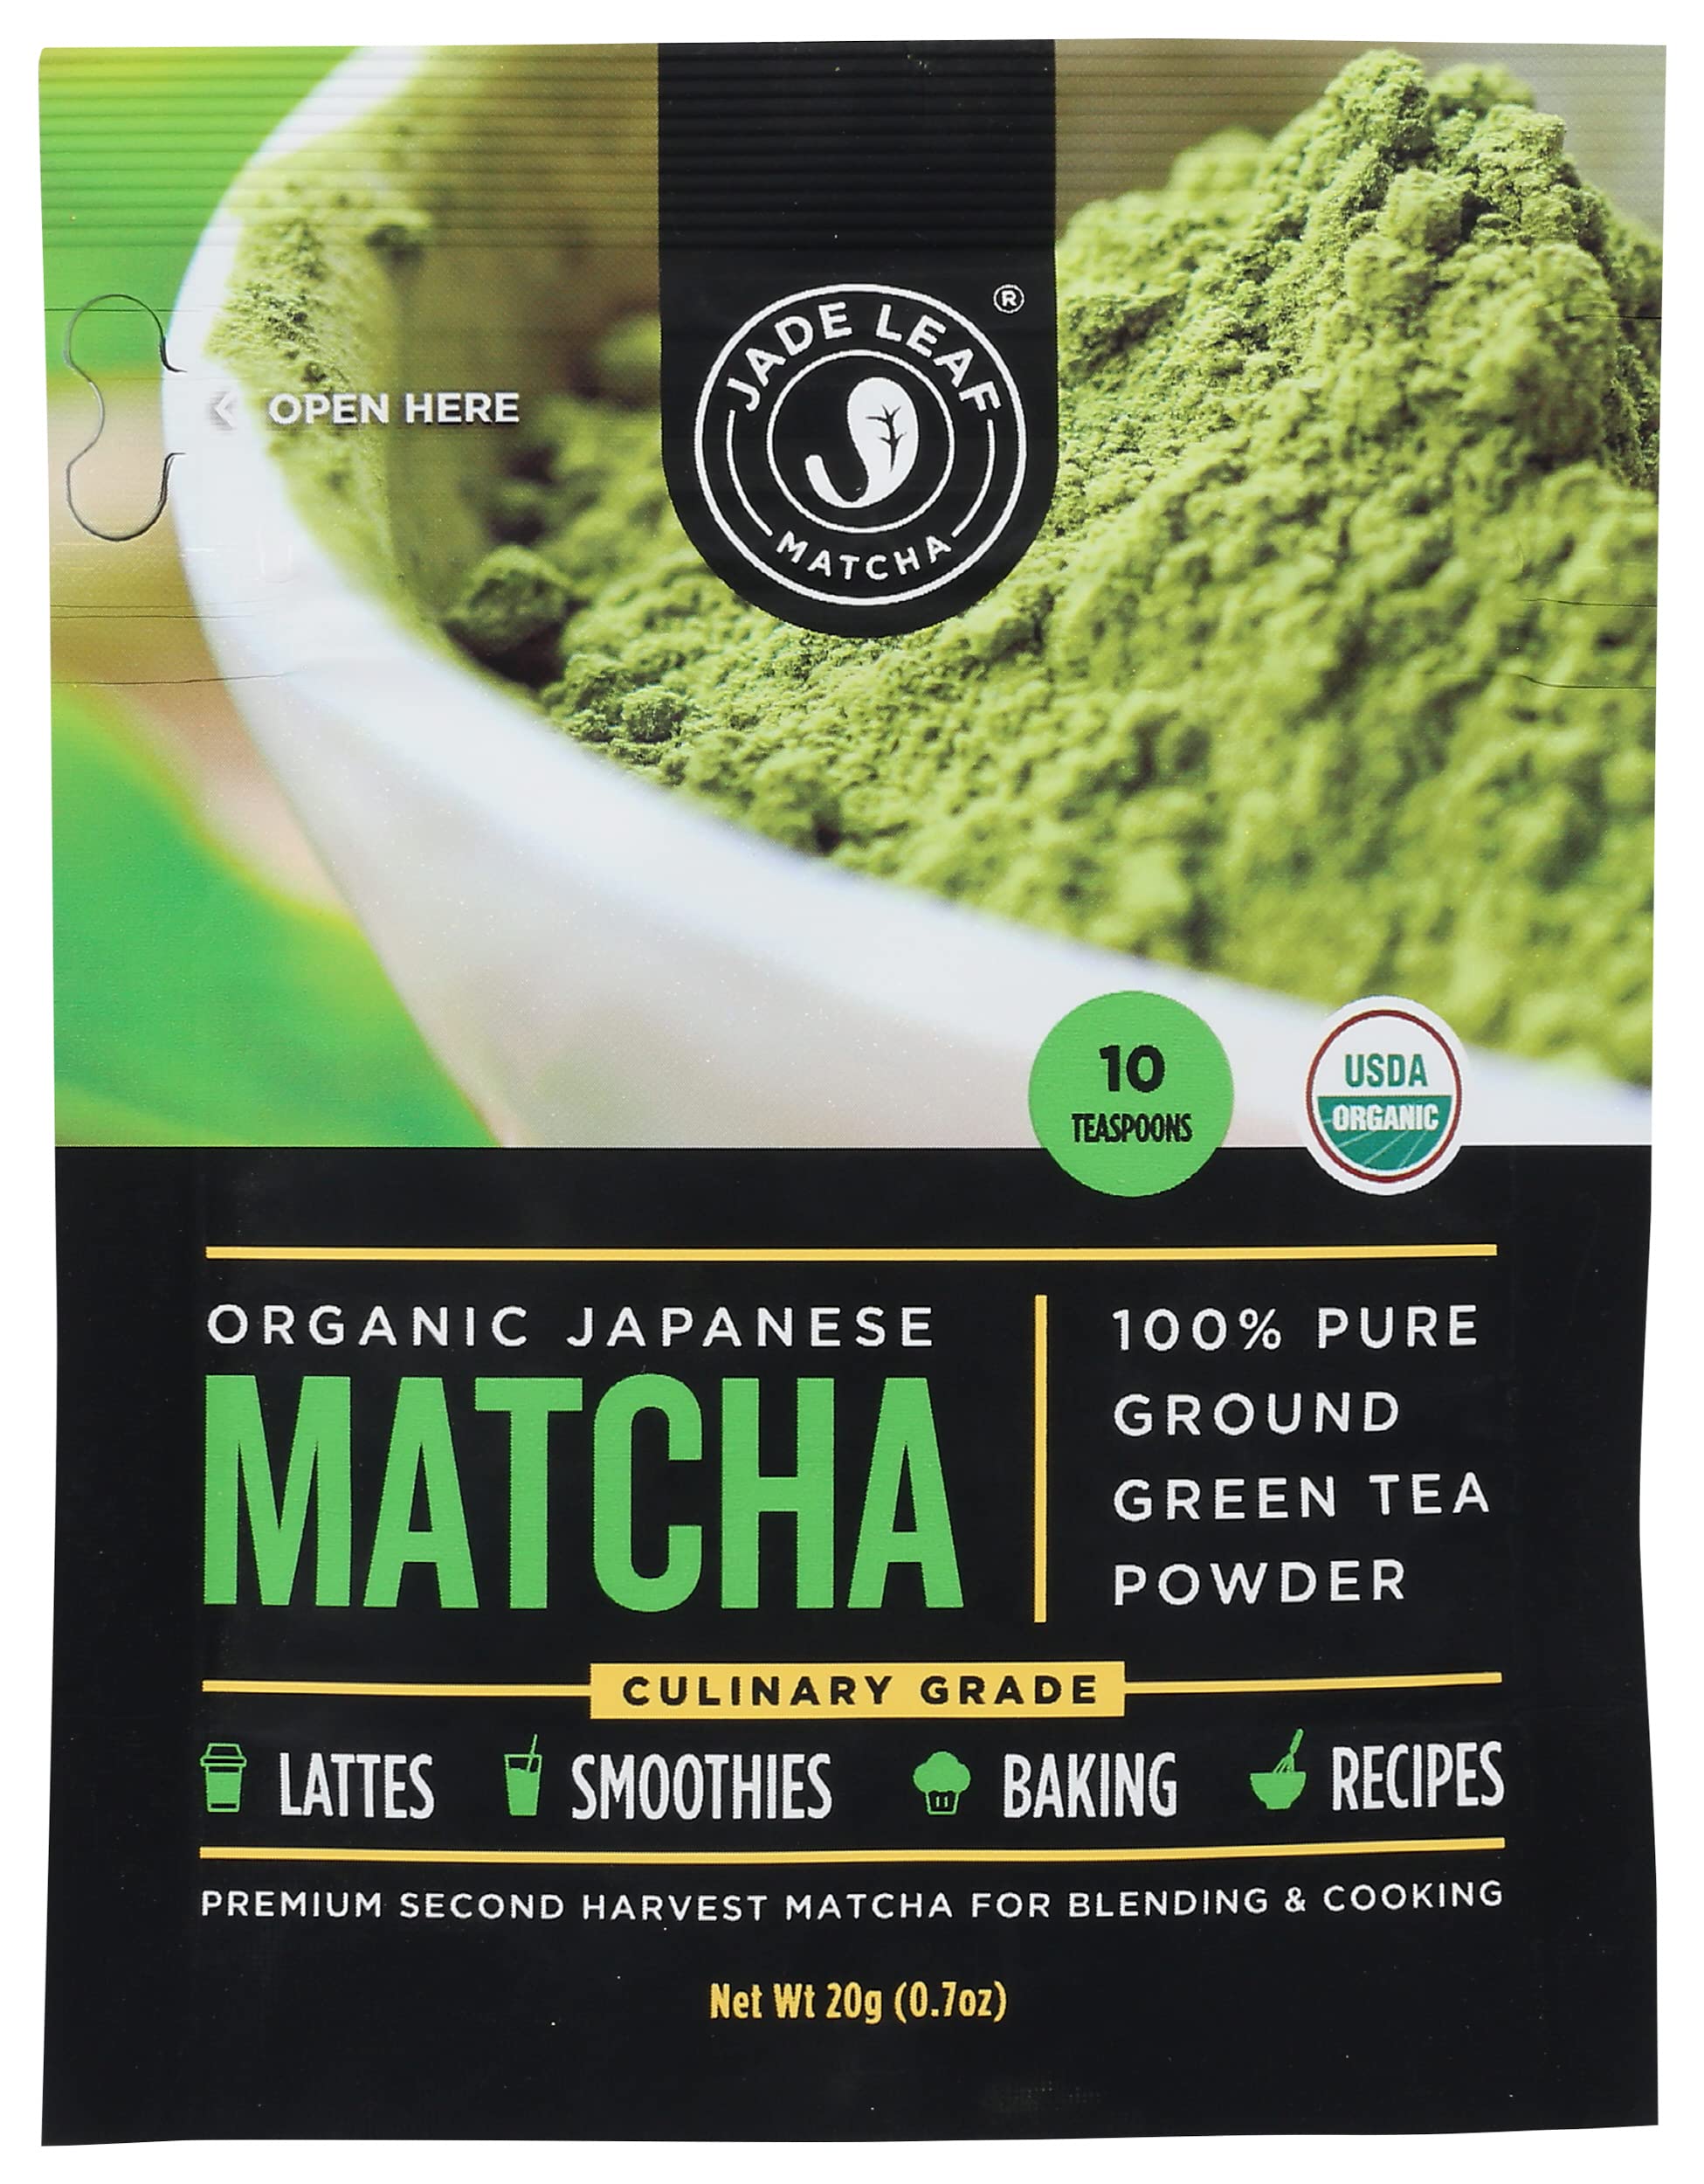 Jade Leaf Matcha  Premium Organic Japanese Matcha & Lattes